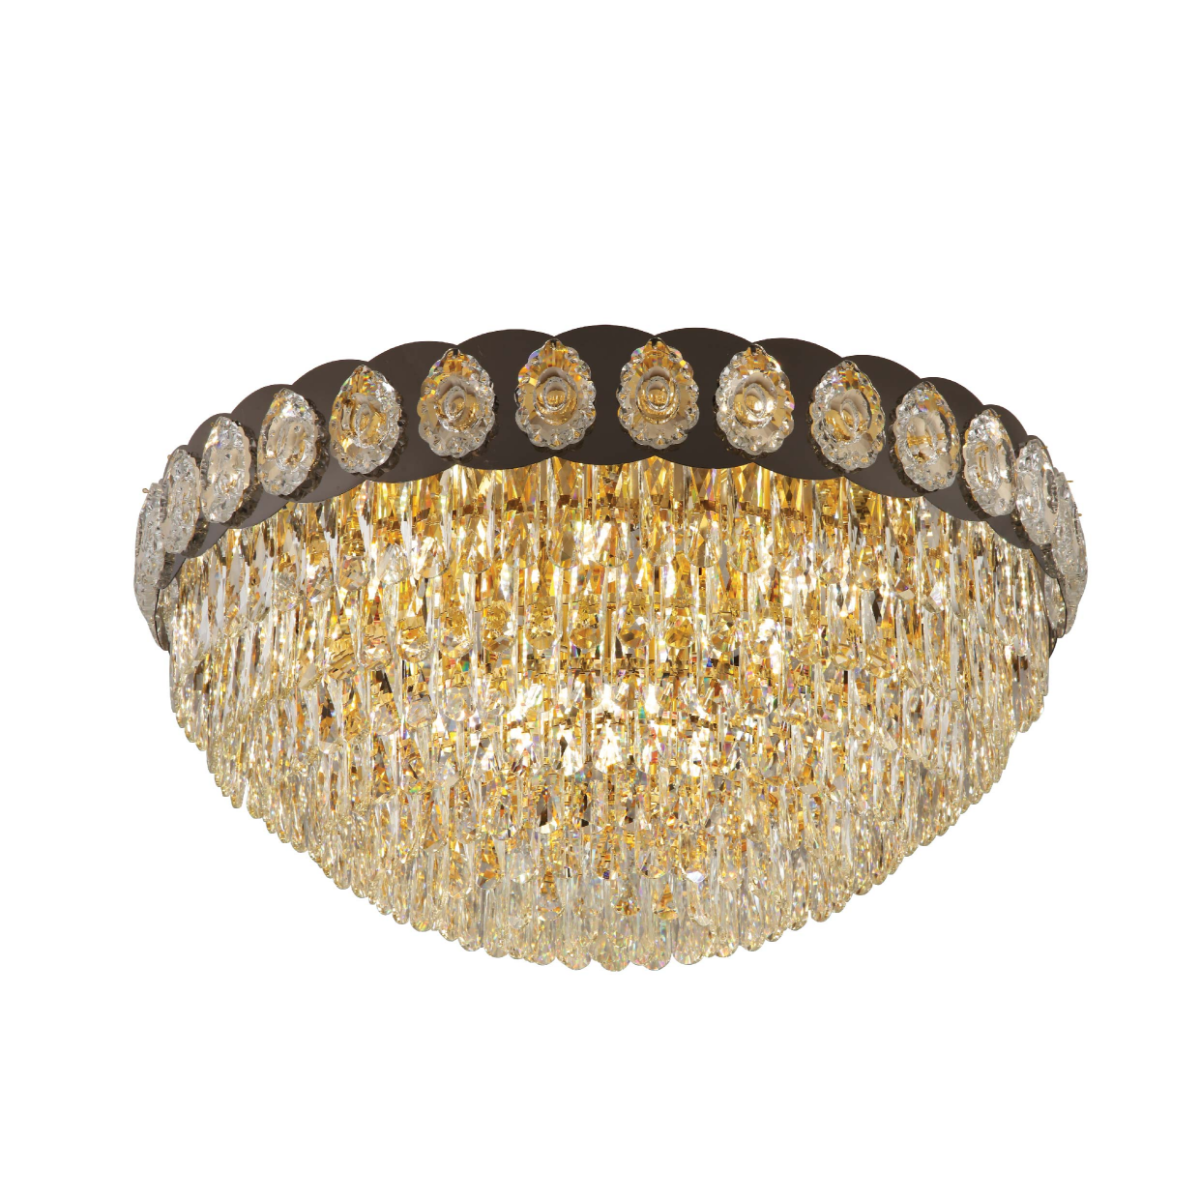 Main image of Luxury Clear Crystal Flush Modern Ceiling Chandelier Light Gold | TEKLED 159-18011